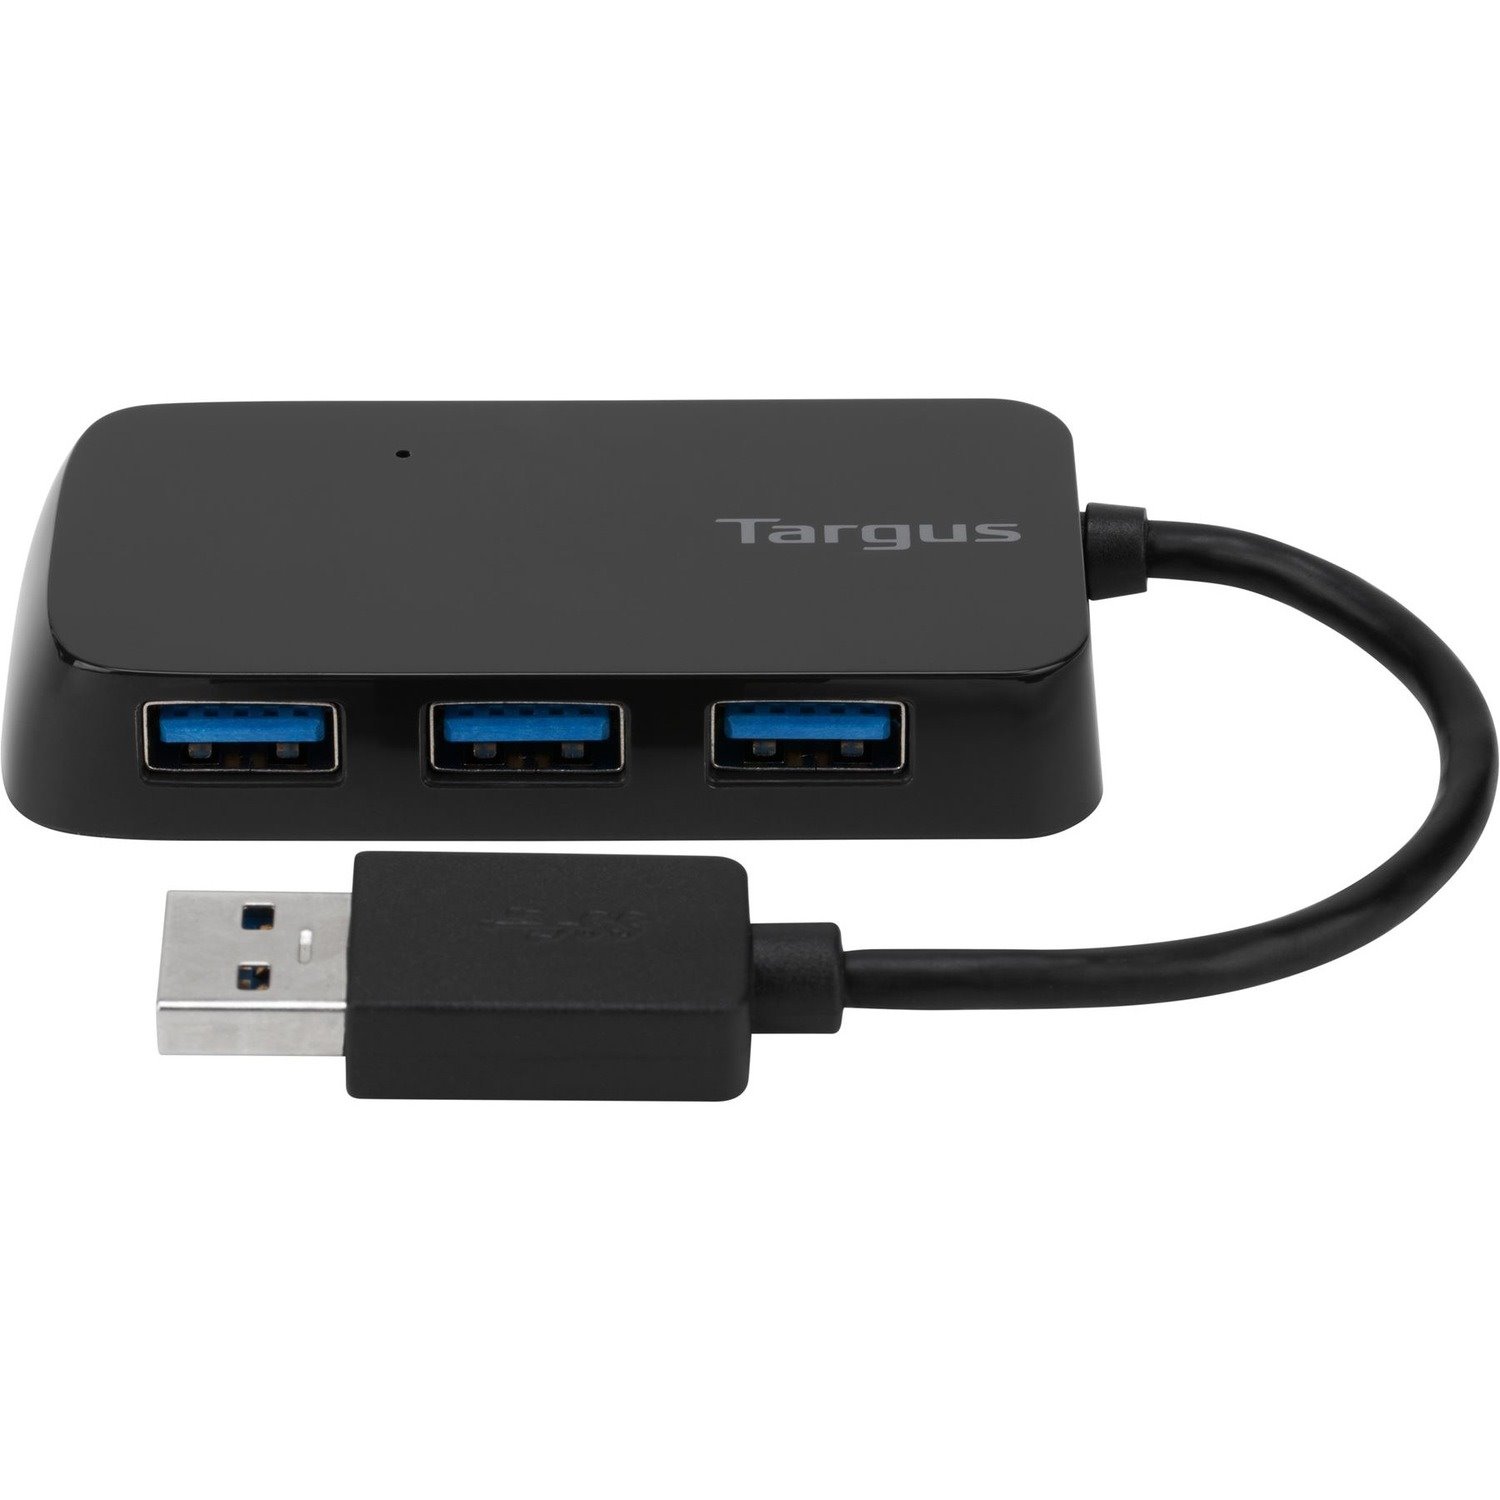 TARGUS ACH124US, 4-PORT USB3.0BUS POWERED HUB